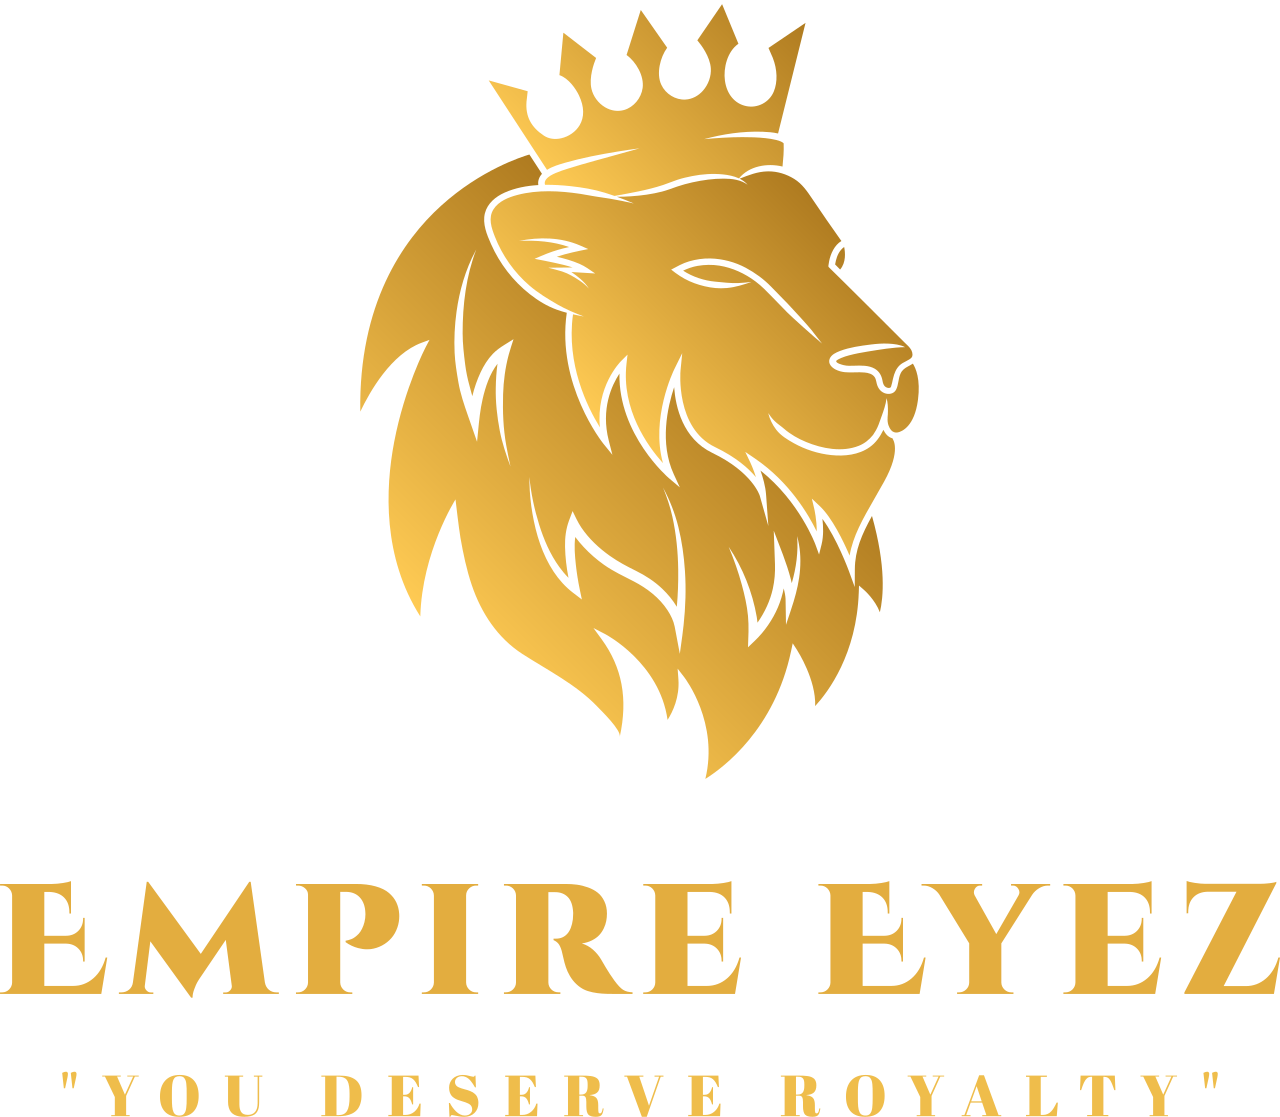 Empire Eyez's web page